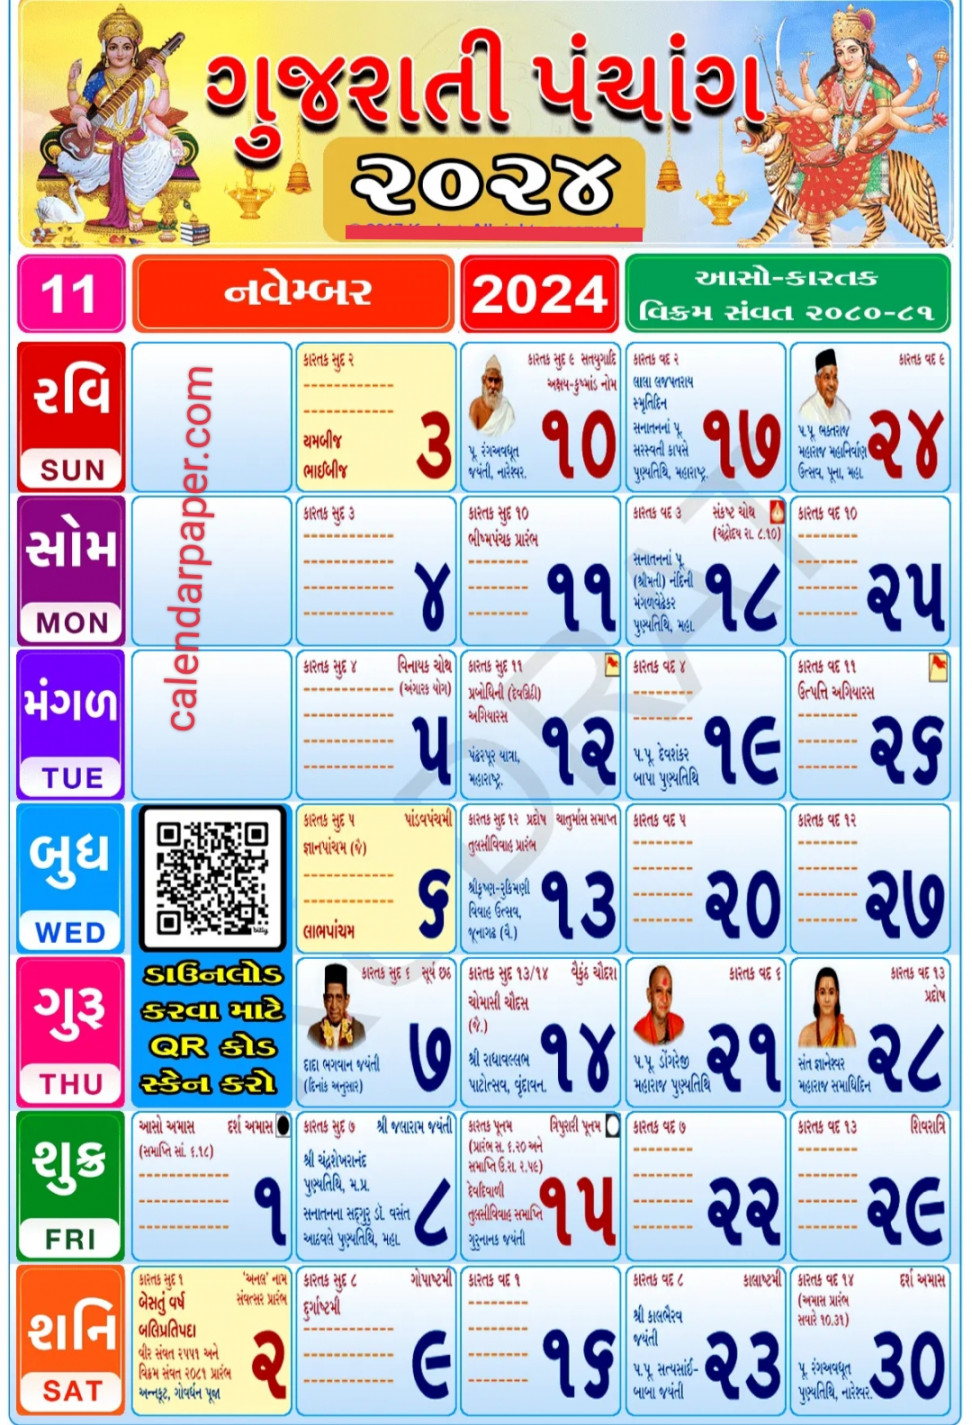 November  Gujarati calendar all festivals, holidays, and tithi